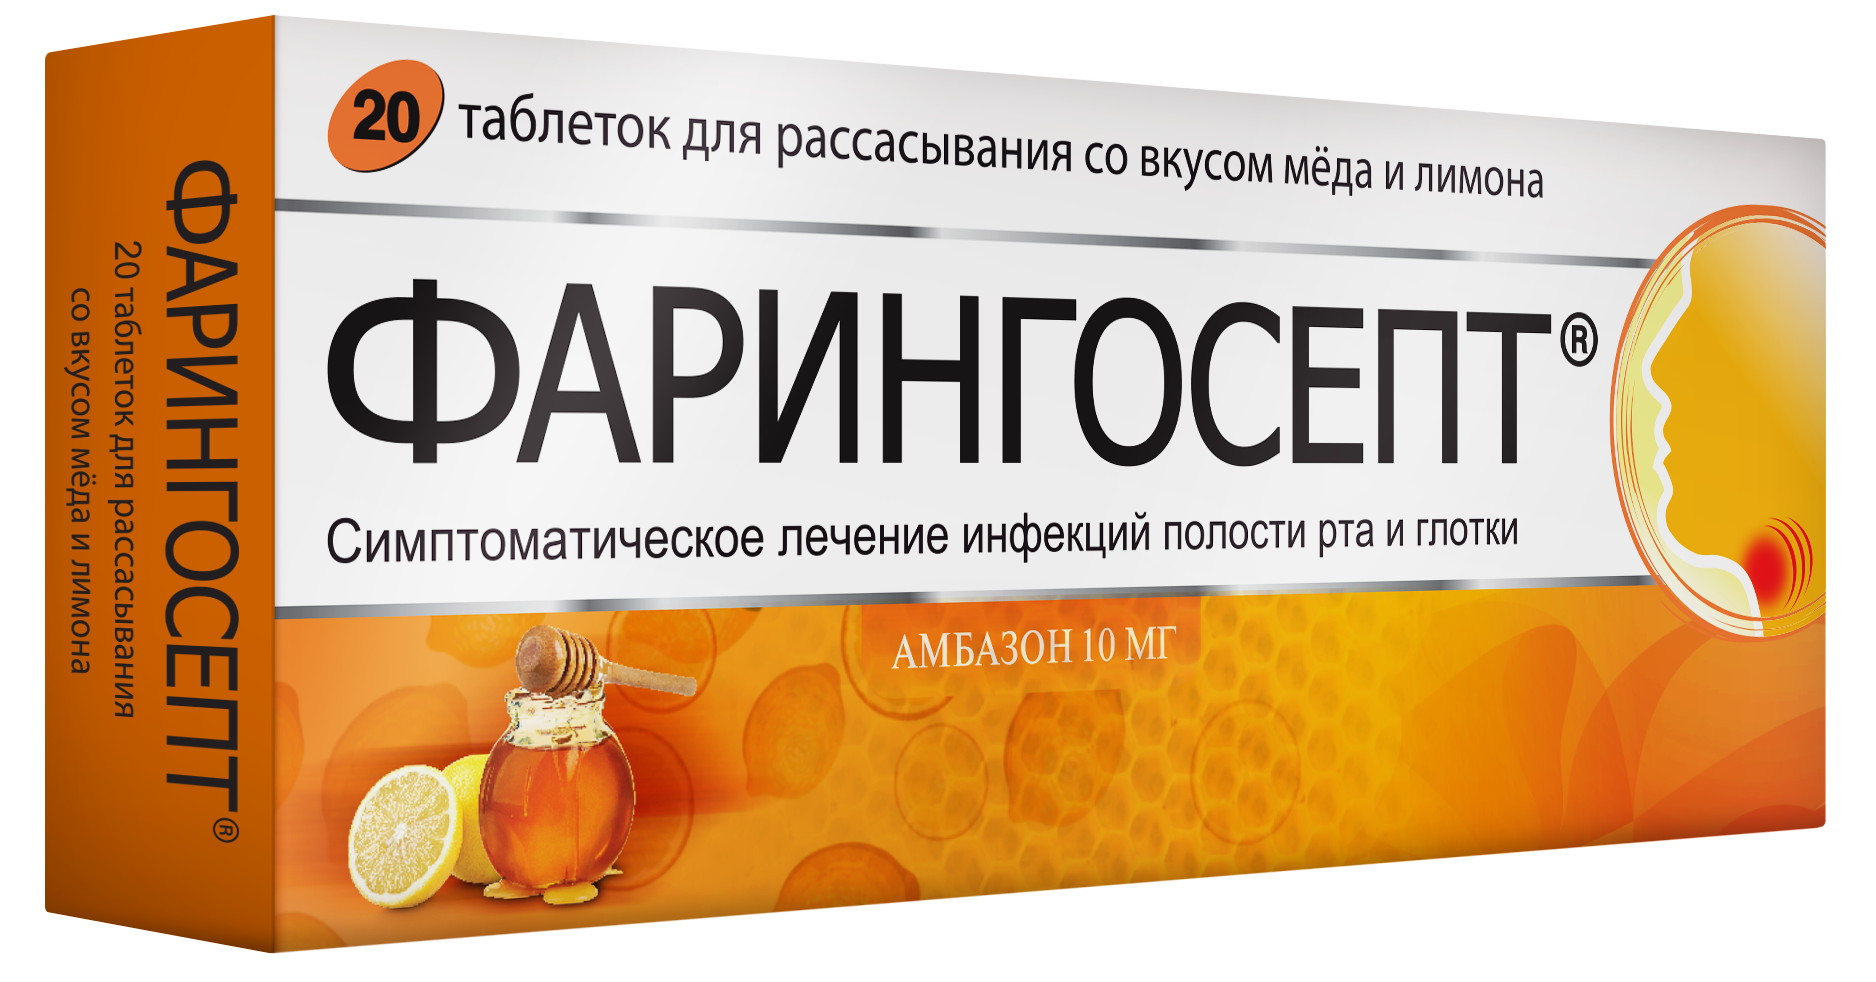 Фарингосепт, таблетки для рассасывания (мед-лимон) 10 мг, 20 шт.